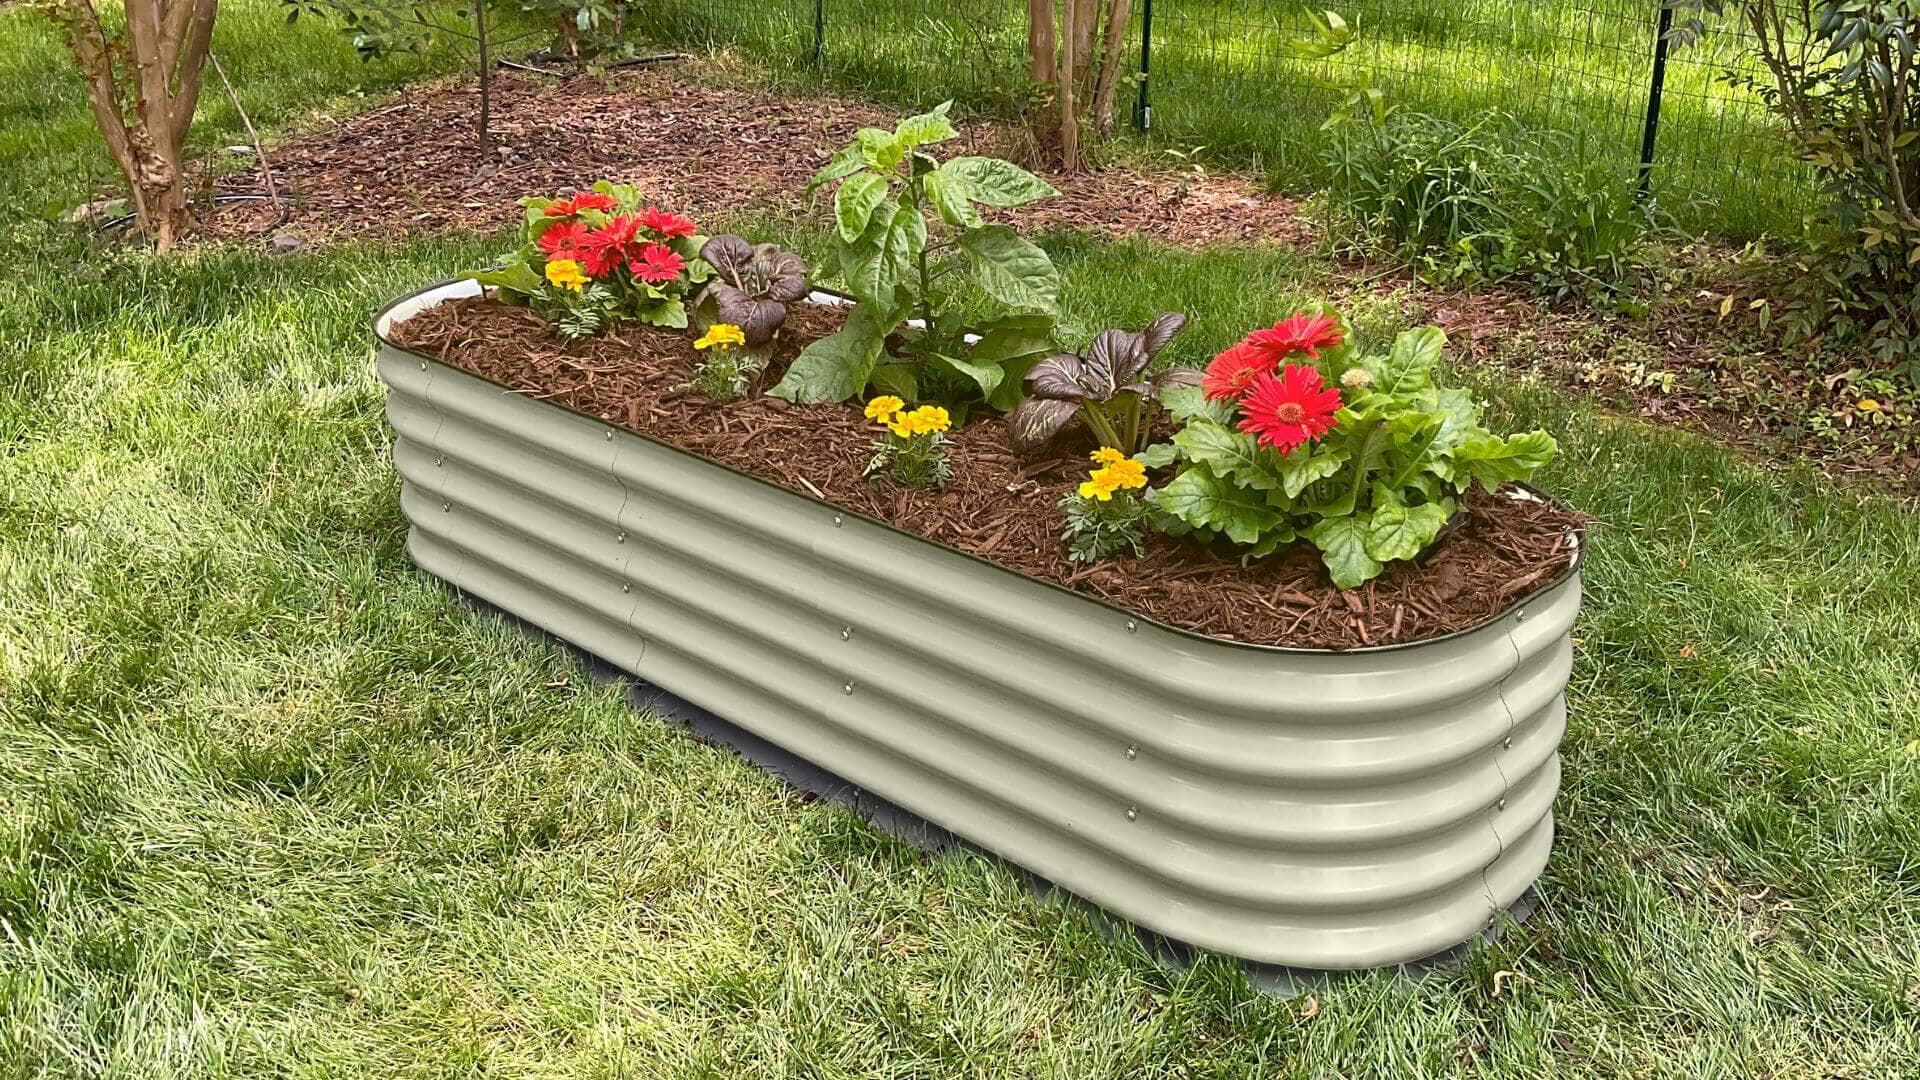 VegHerb's 6-in-1 Metal Raised Garden Bed (17" Height) Gardening VegHerb Ivory White 